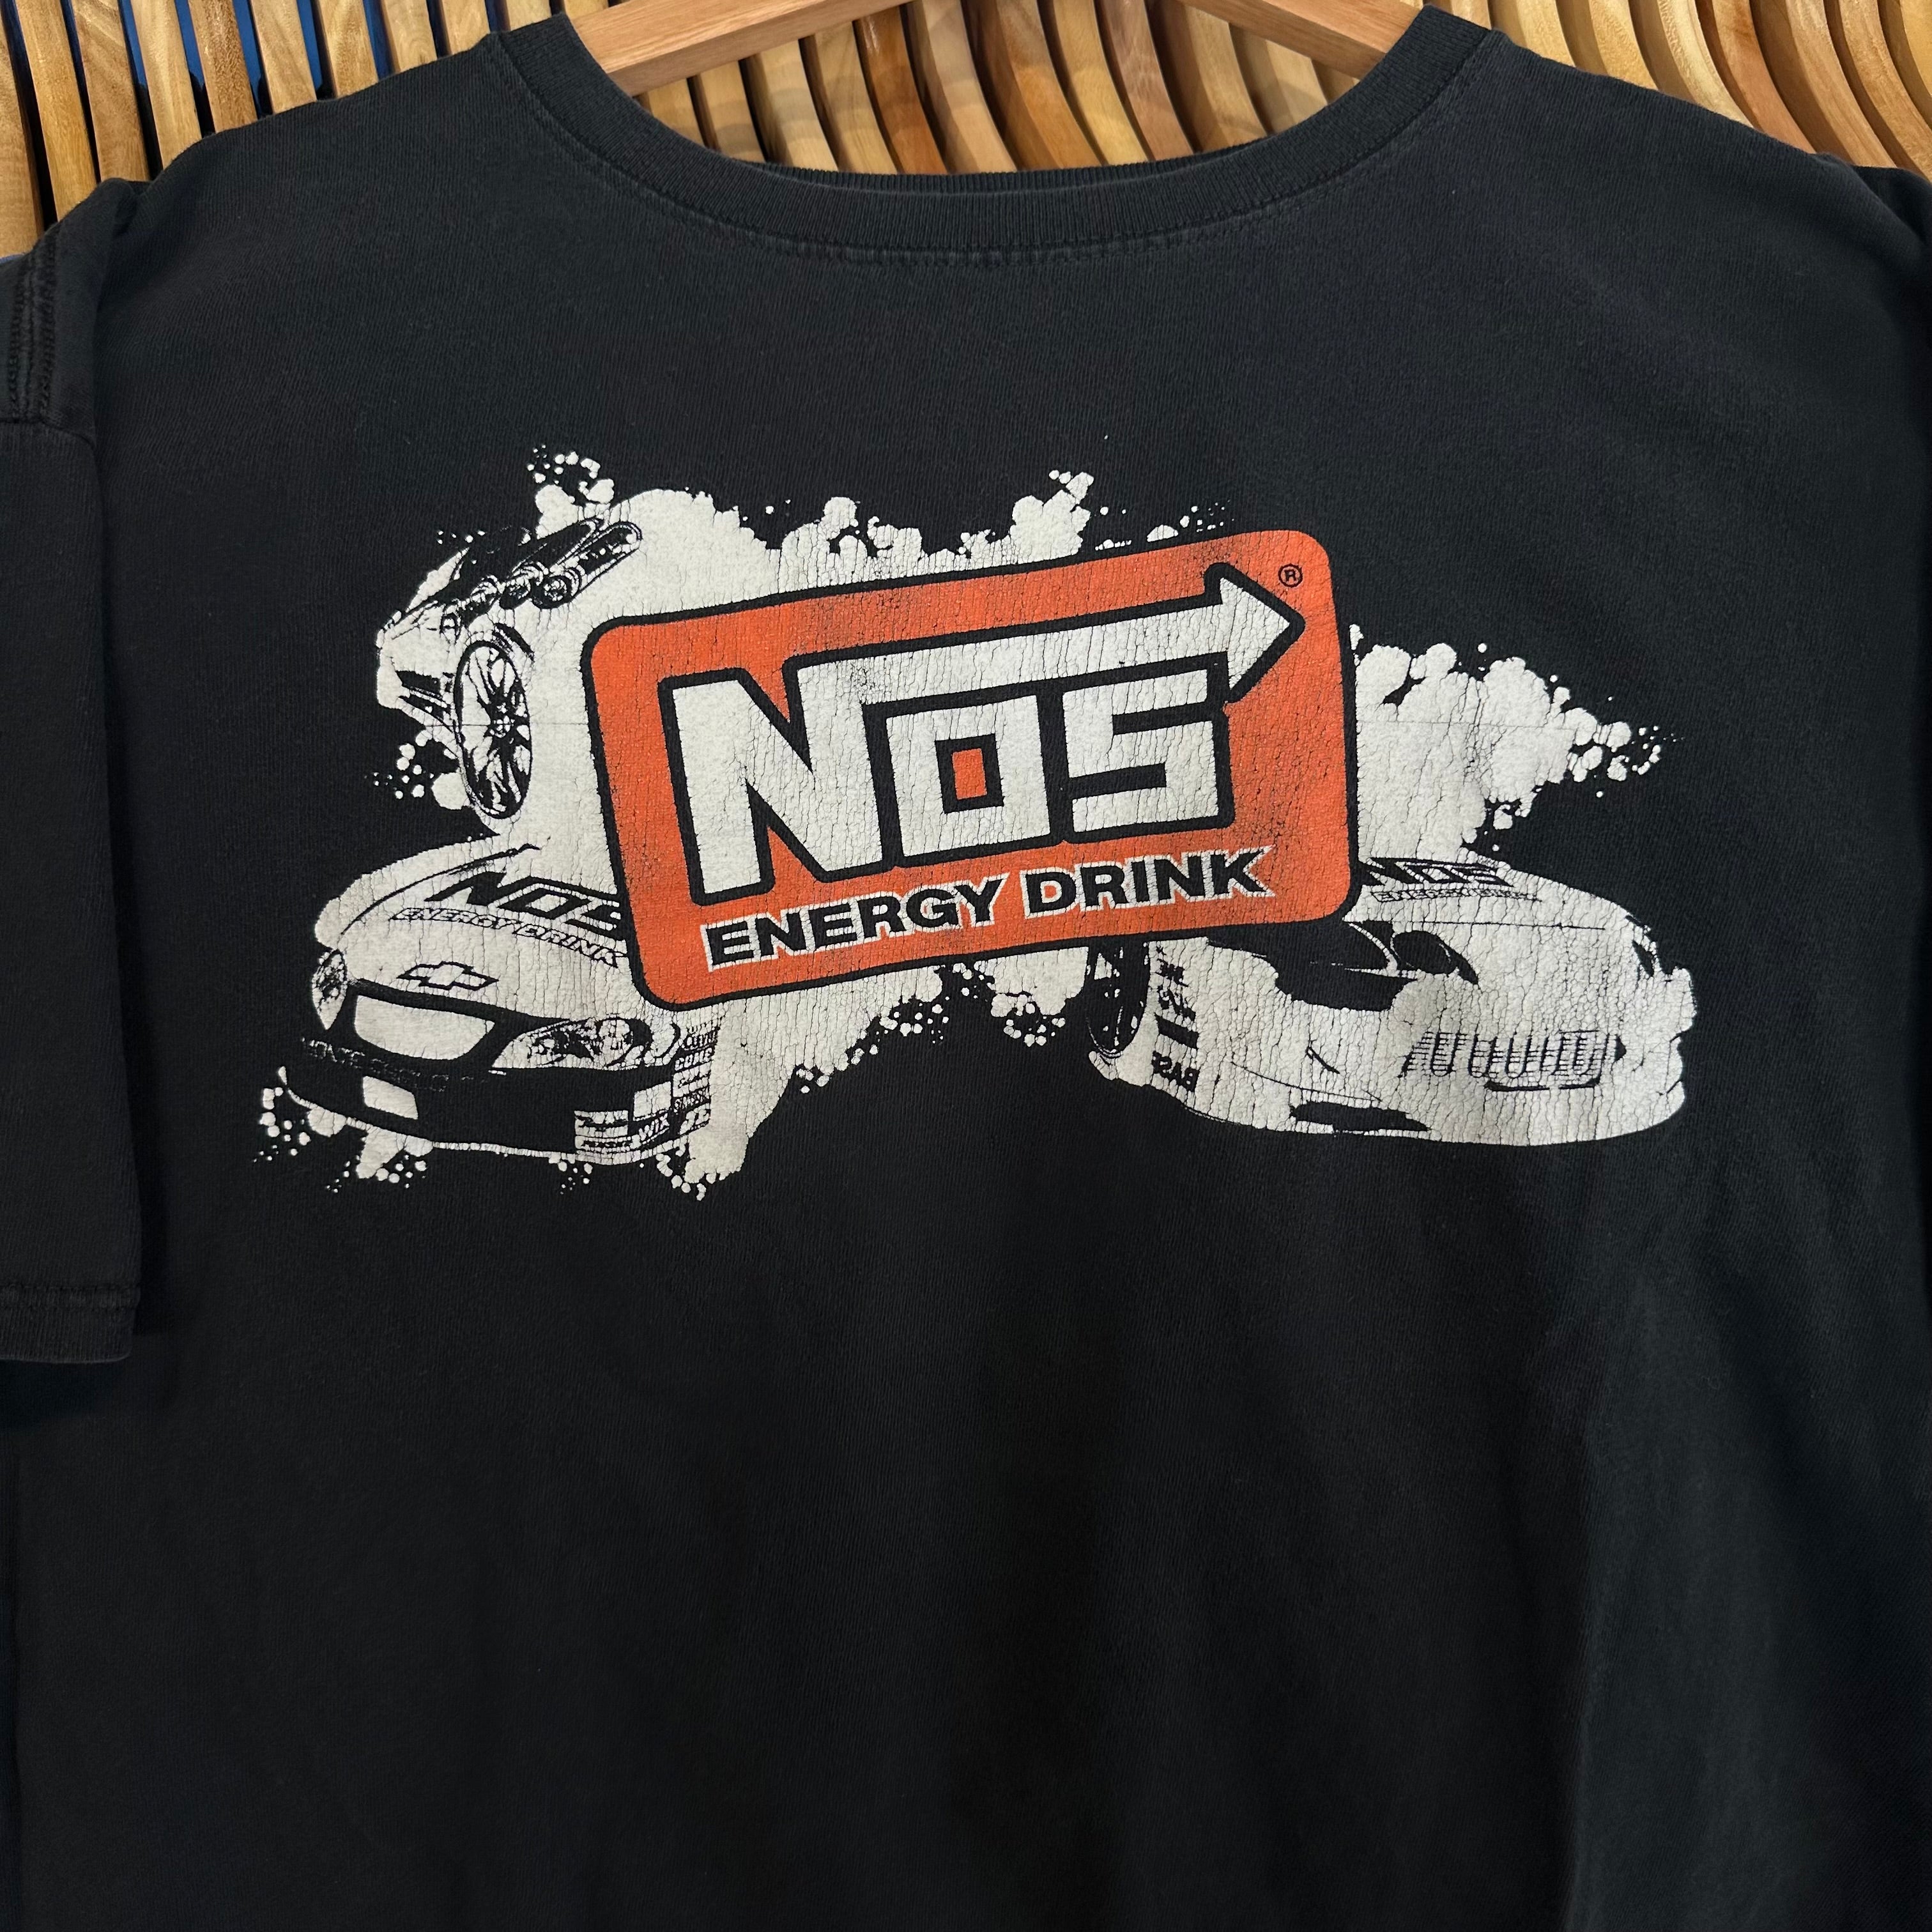 NOS Energy Drink T-Shirt